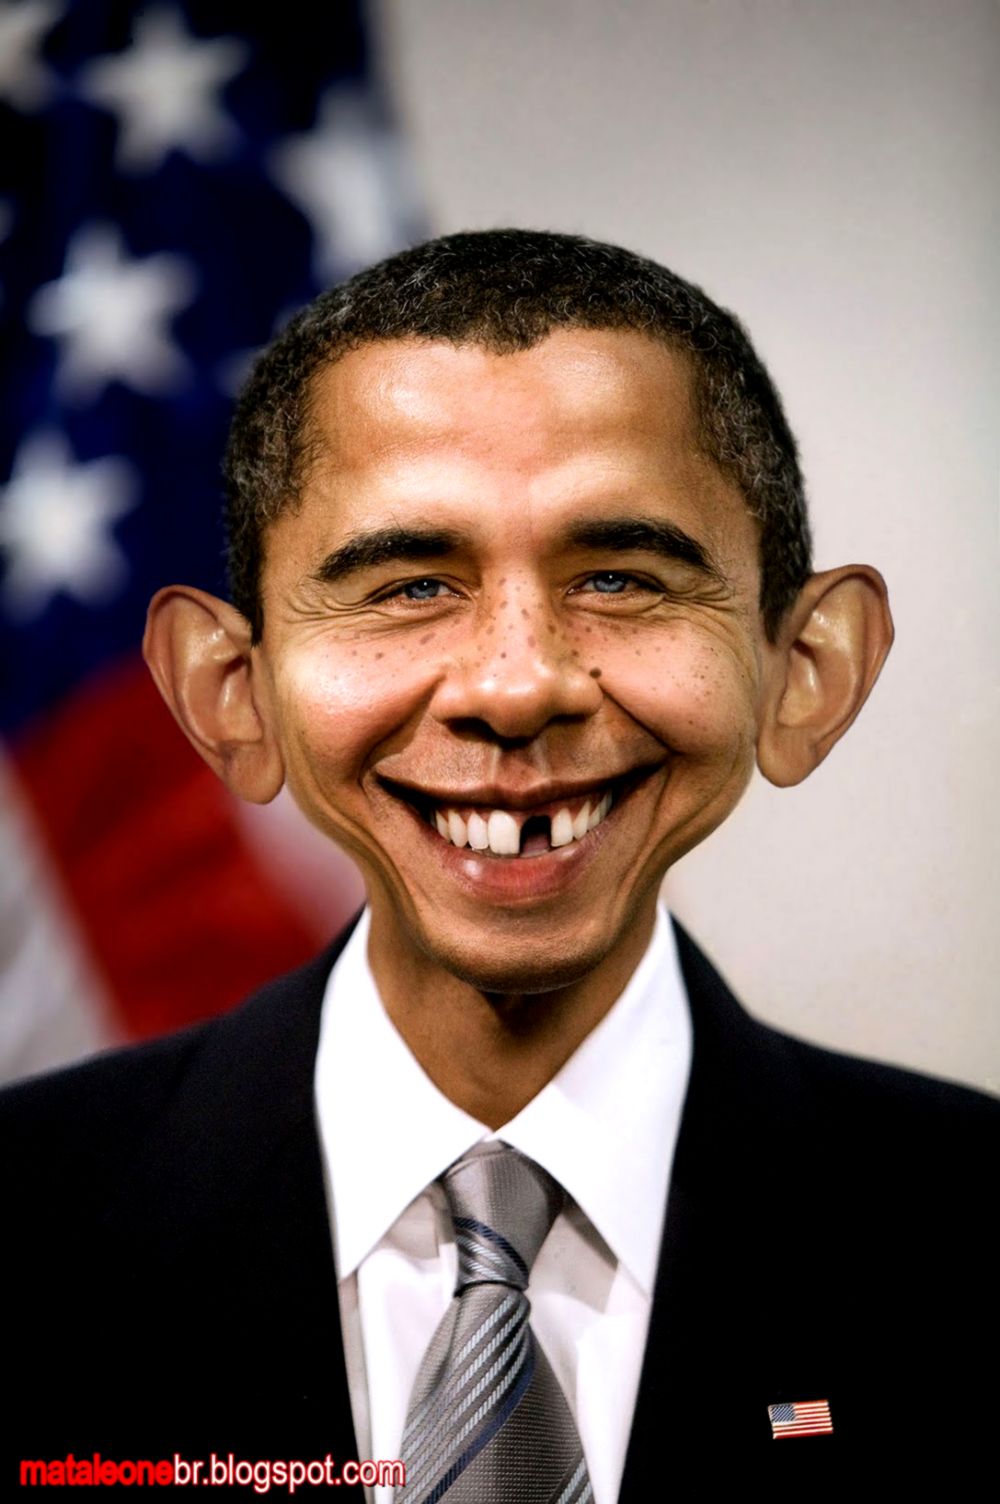 Funny Image Of Barack Obama Wallpaper New